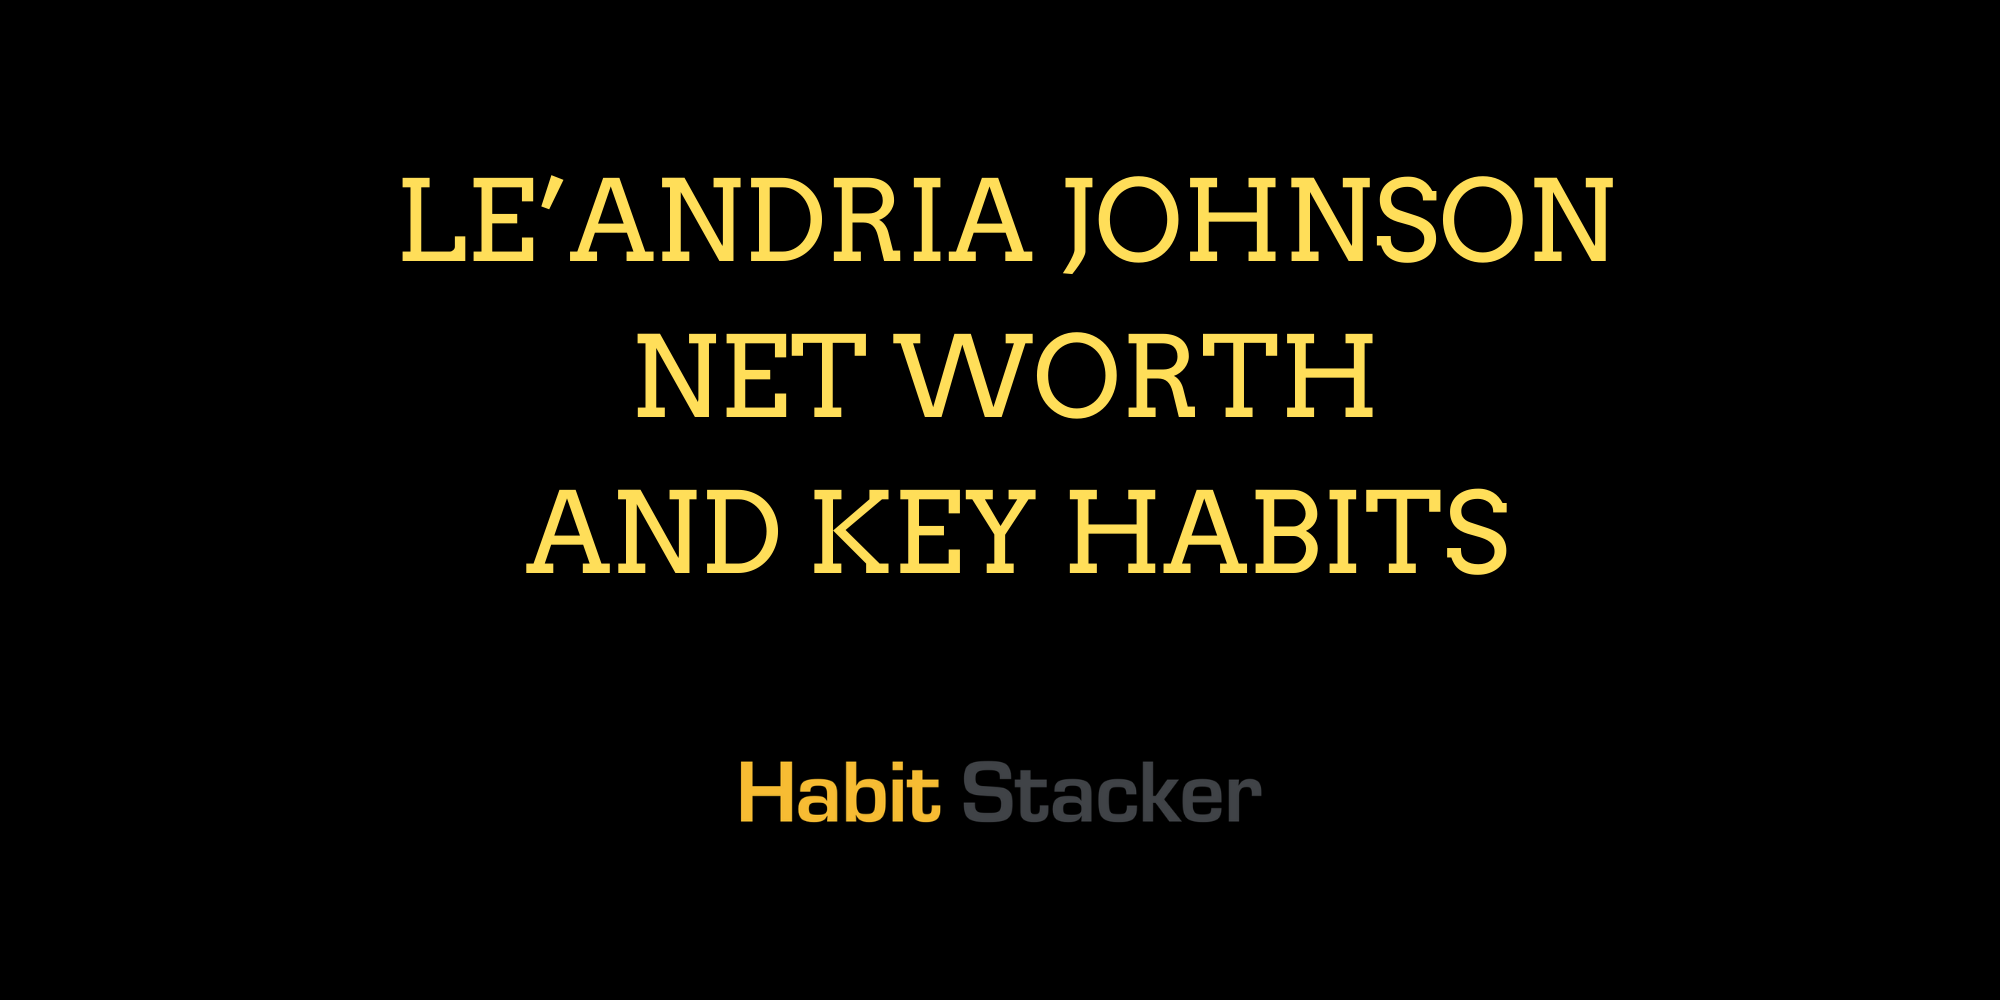 Le’andria Johnson Net Worth and Key Habits